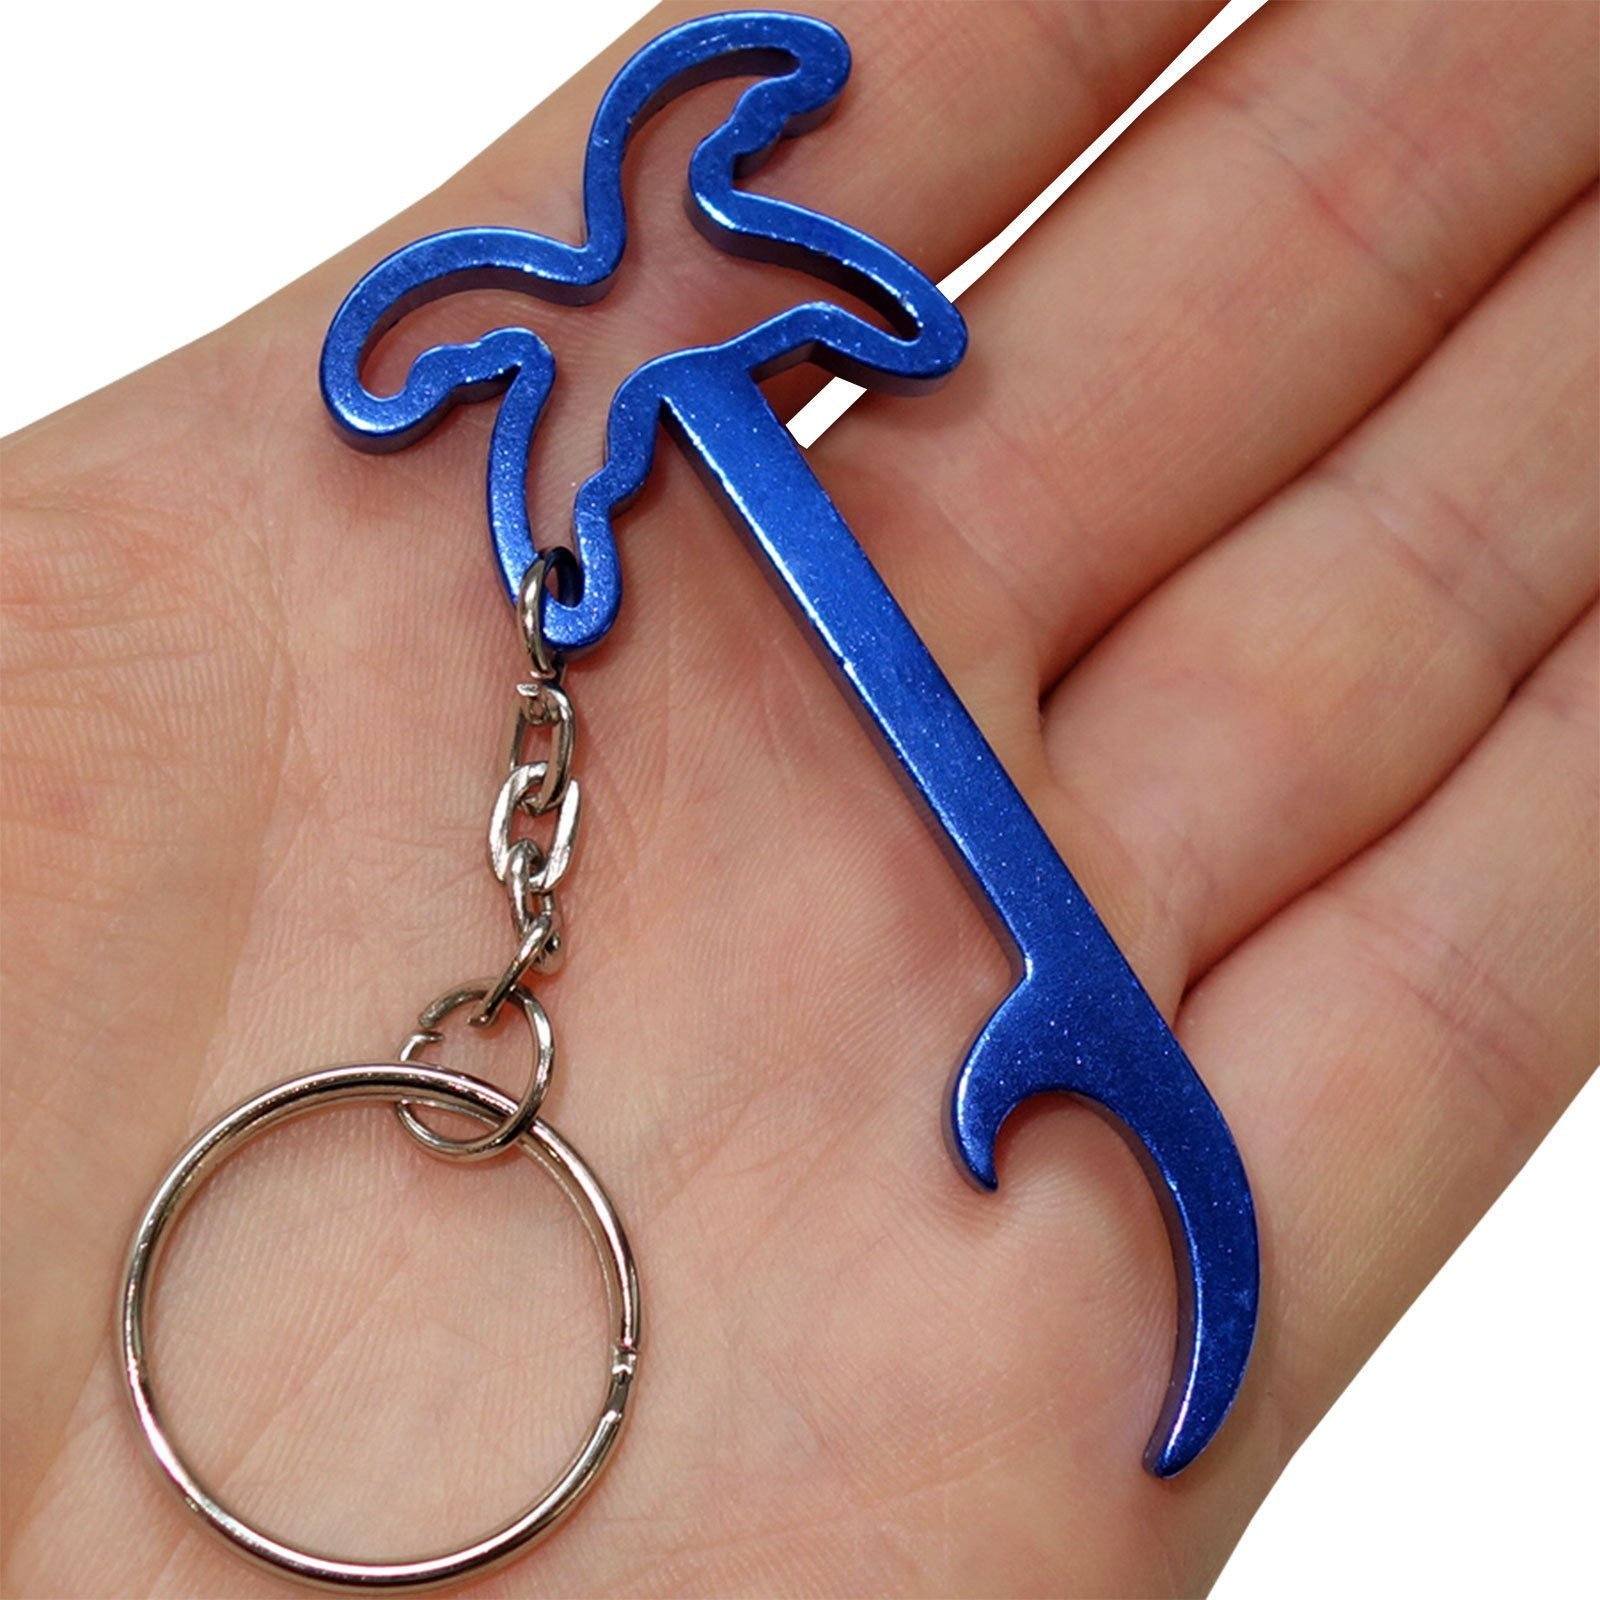 Blue Palm Tree Key Ring Chain Fob Beer Bottle Opener Keyring Keychain Bag Charm